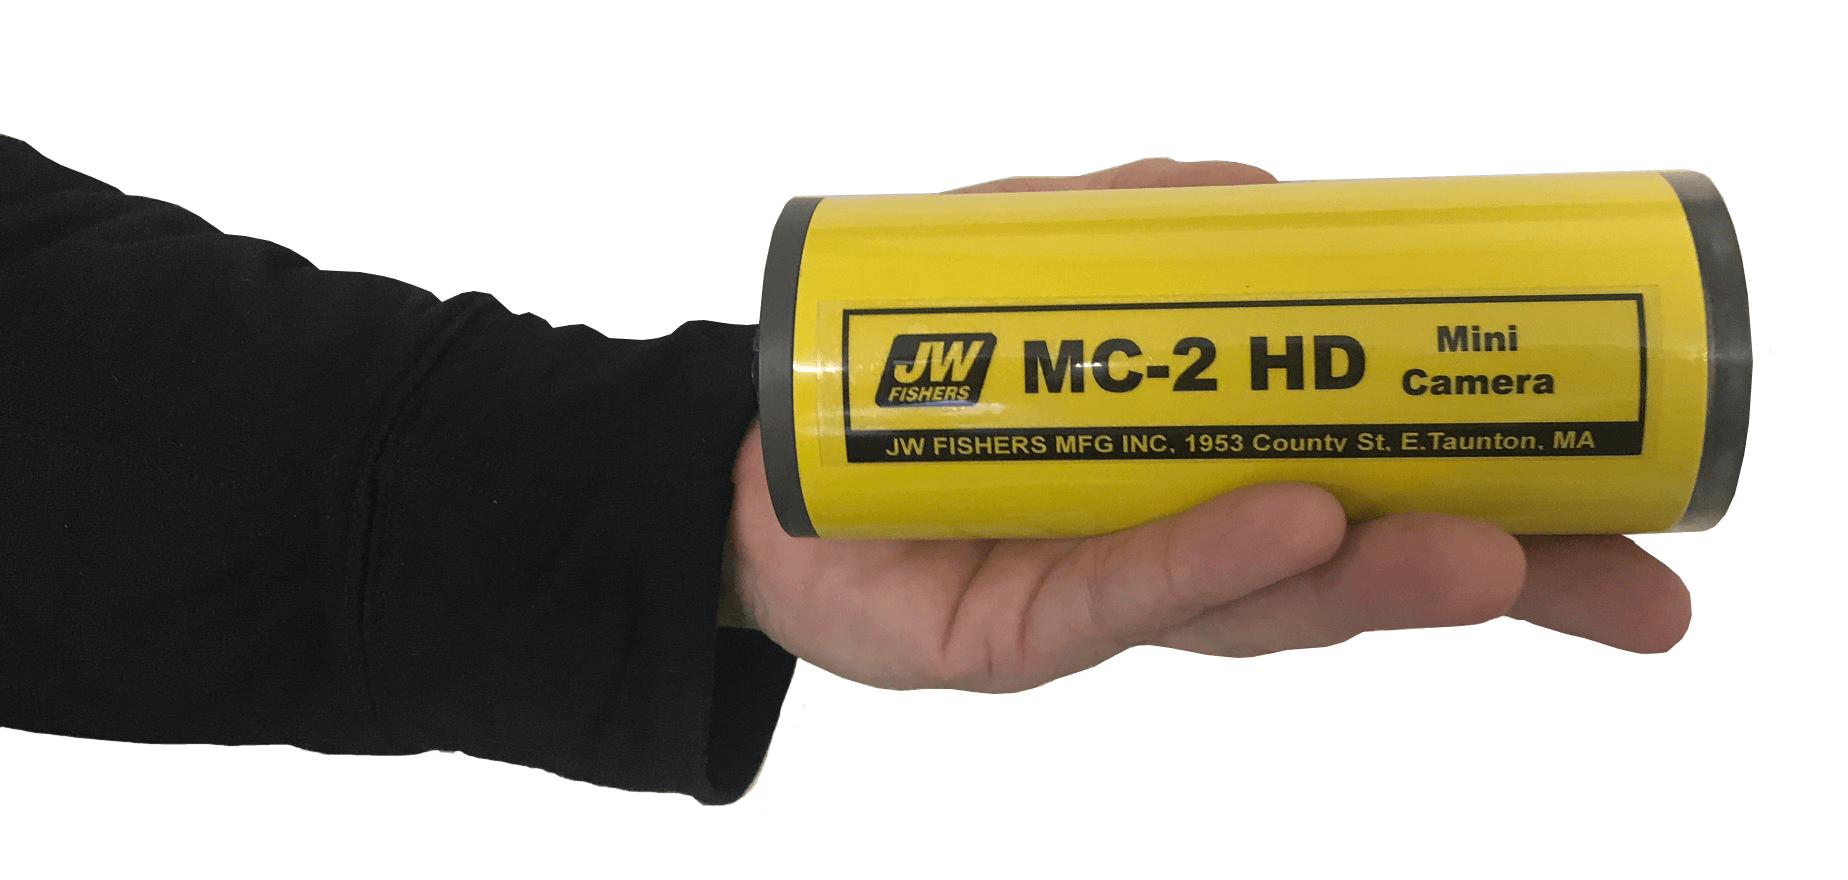 A hand holding a MC-2